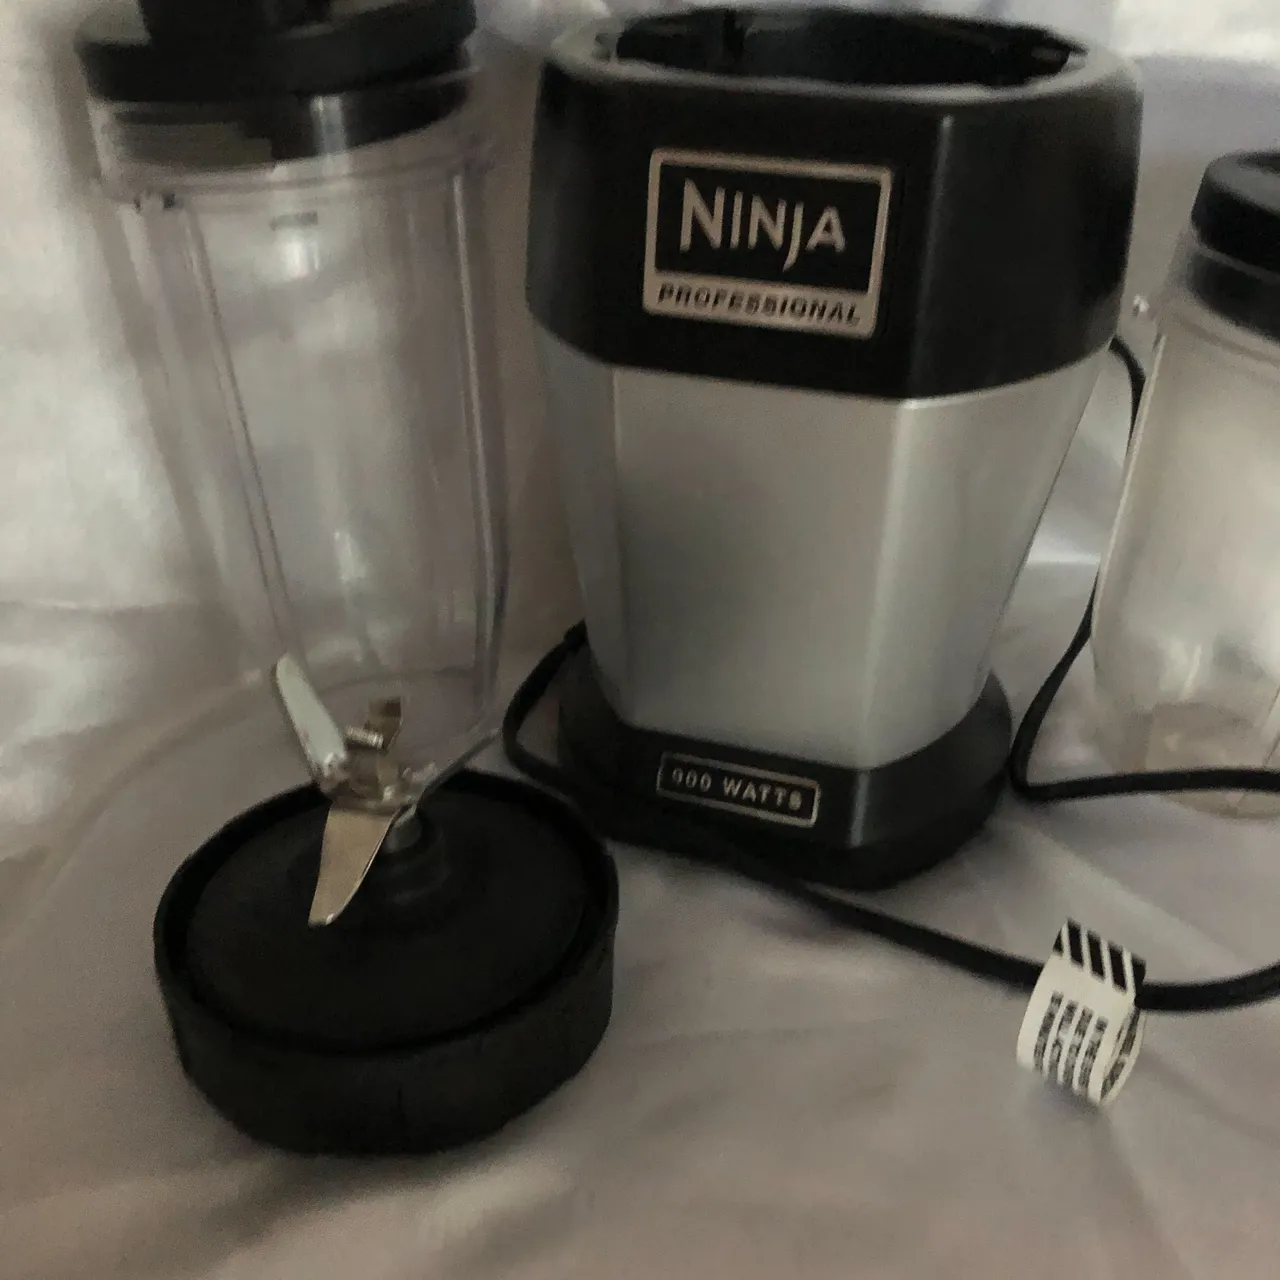 Ninja blender 900w photo 1